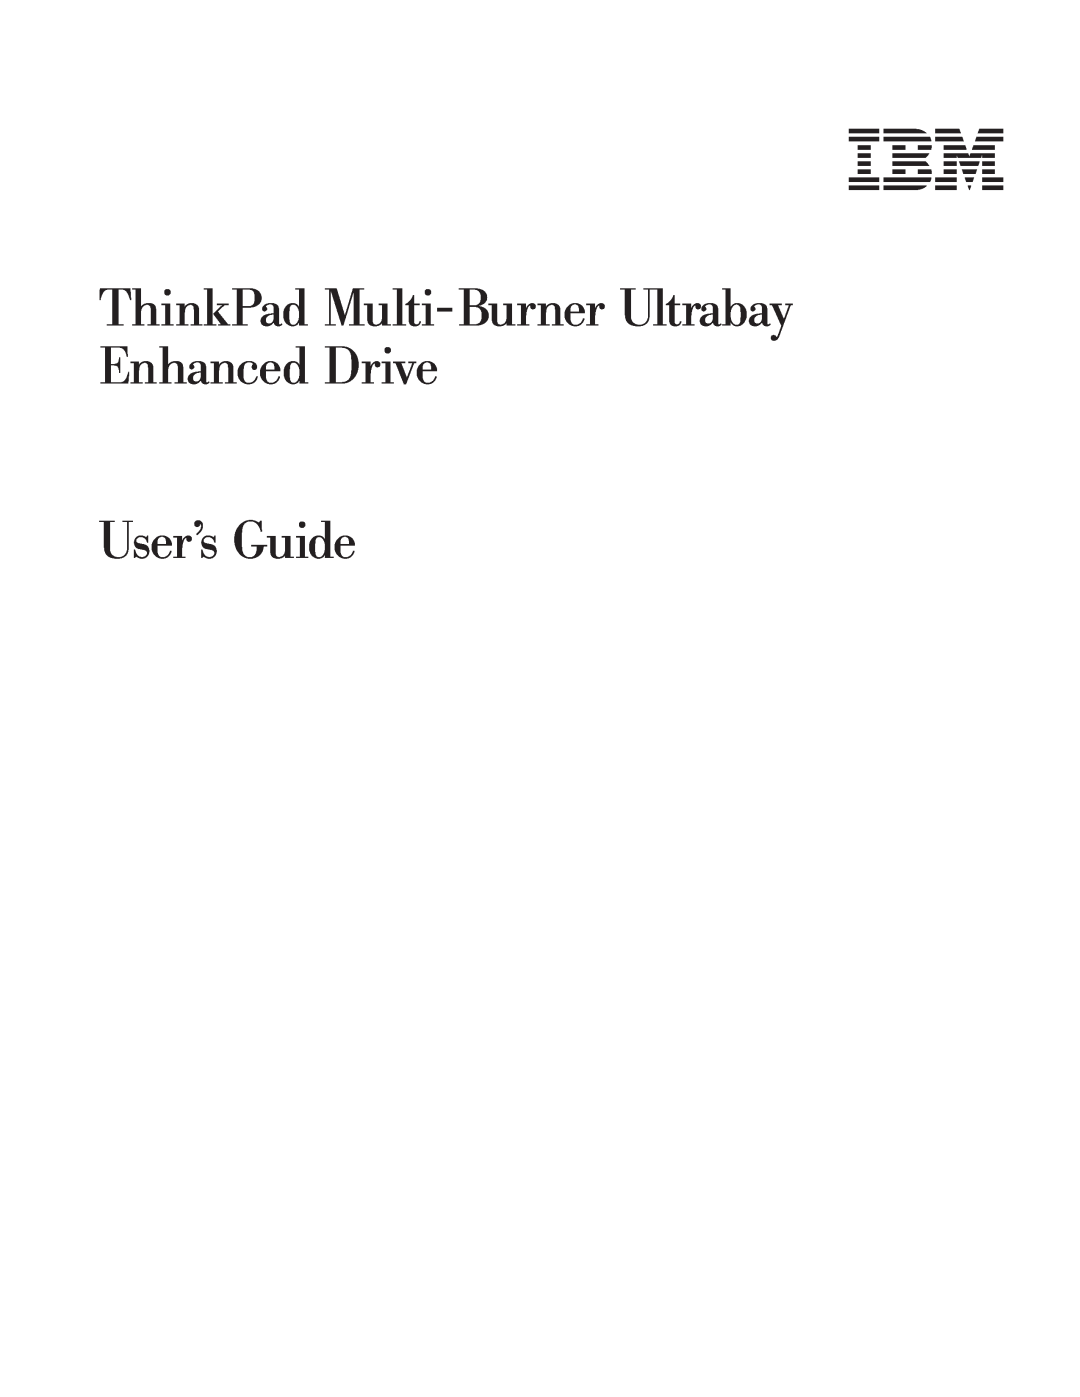 IBM 73P3279 manual ThinkPad Multi-Burner Ultrabay Enhanced Drive User’s Guide 